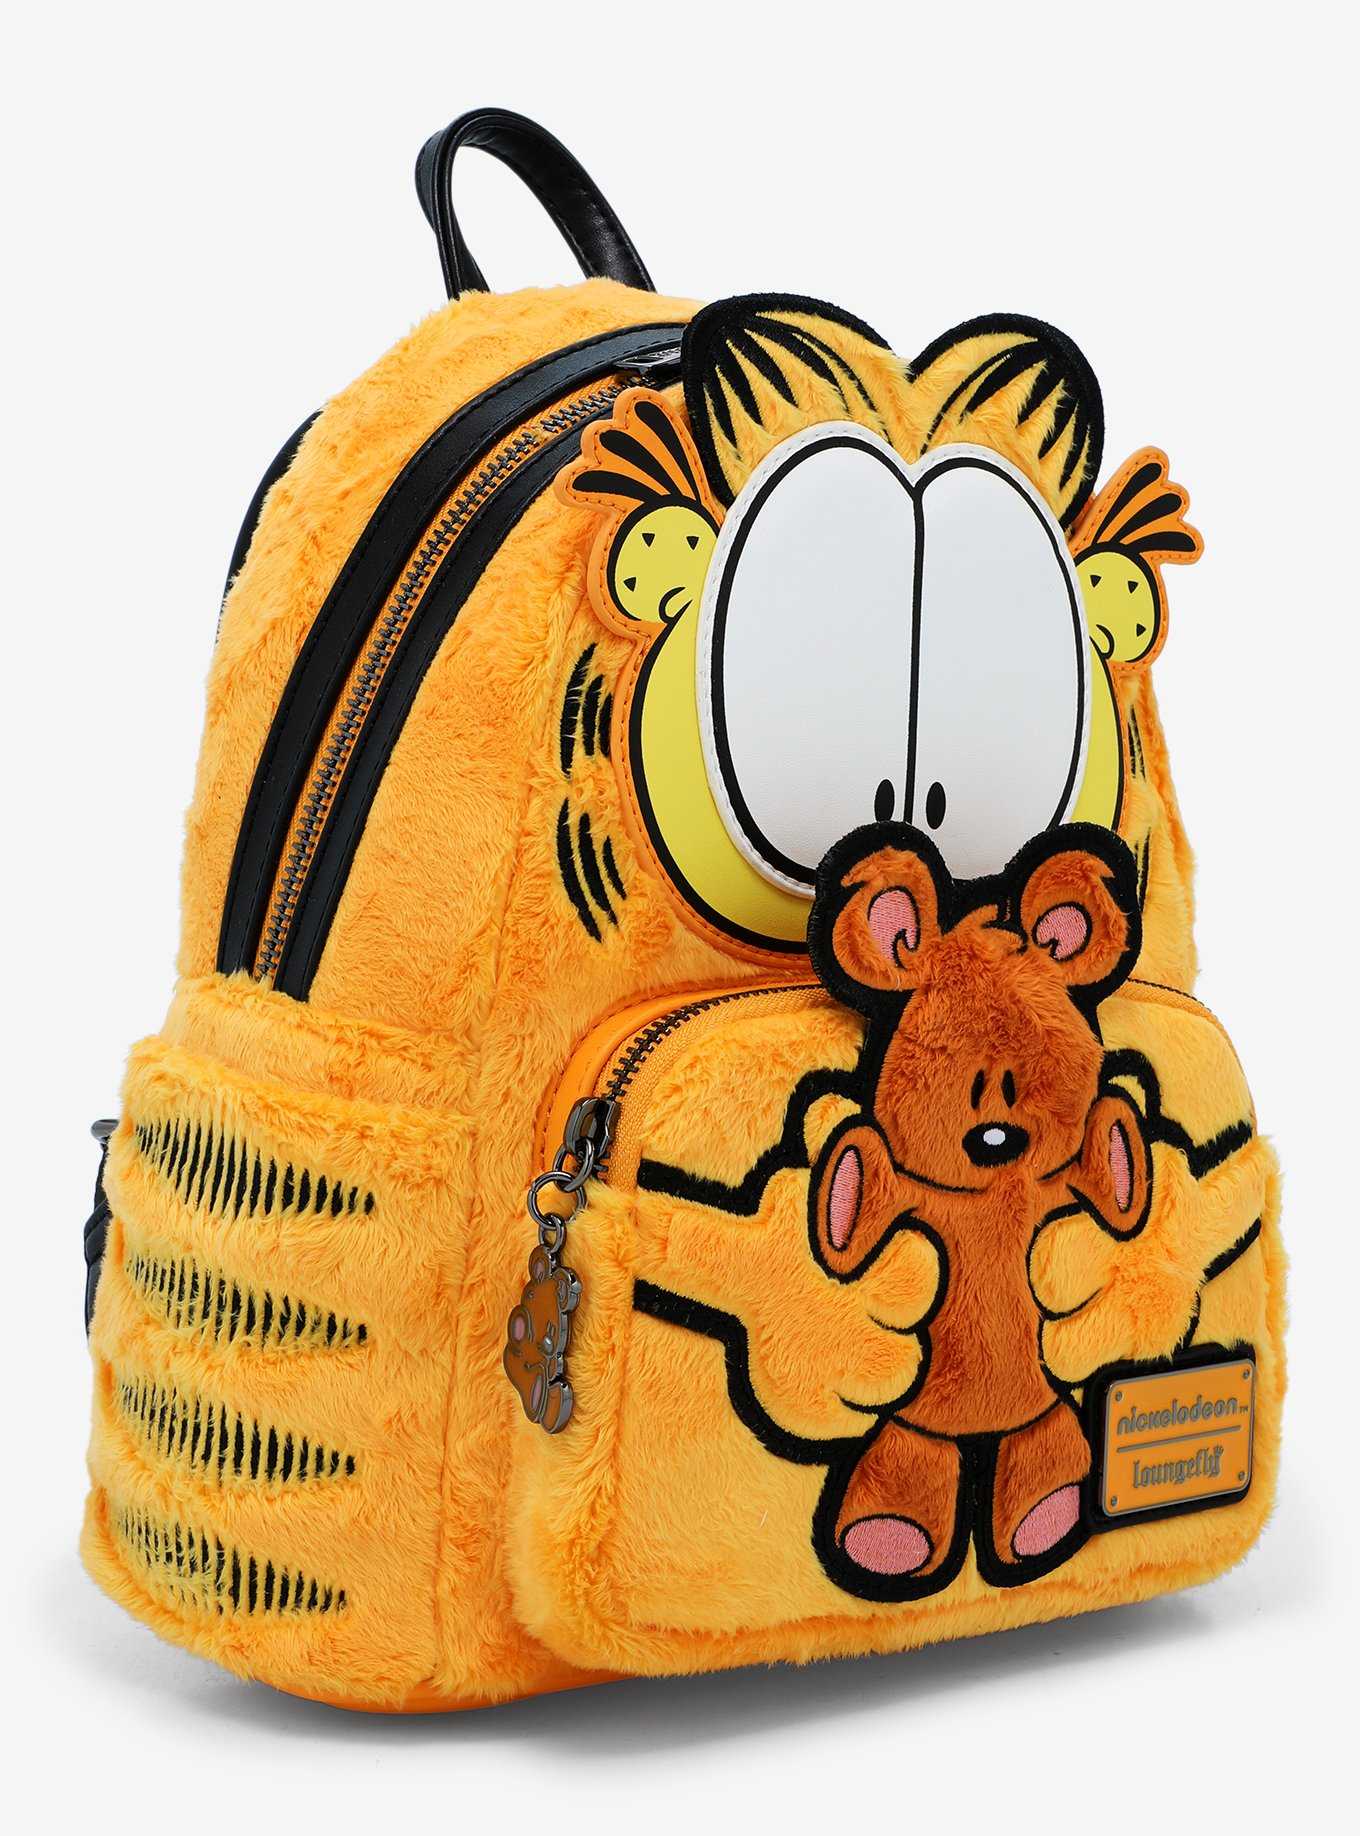 Loungefly Garfield Pooky Plush Mini Backpack, , hi-res